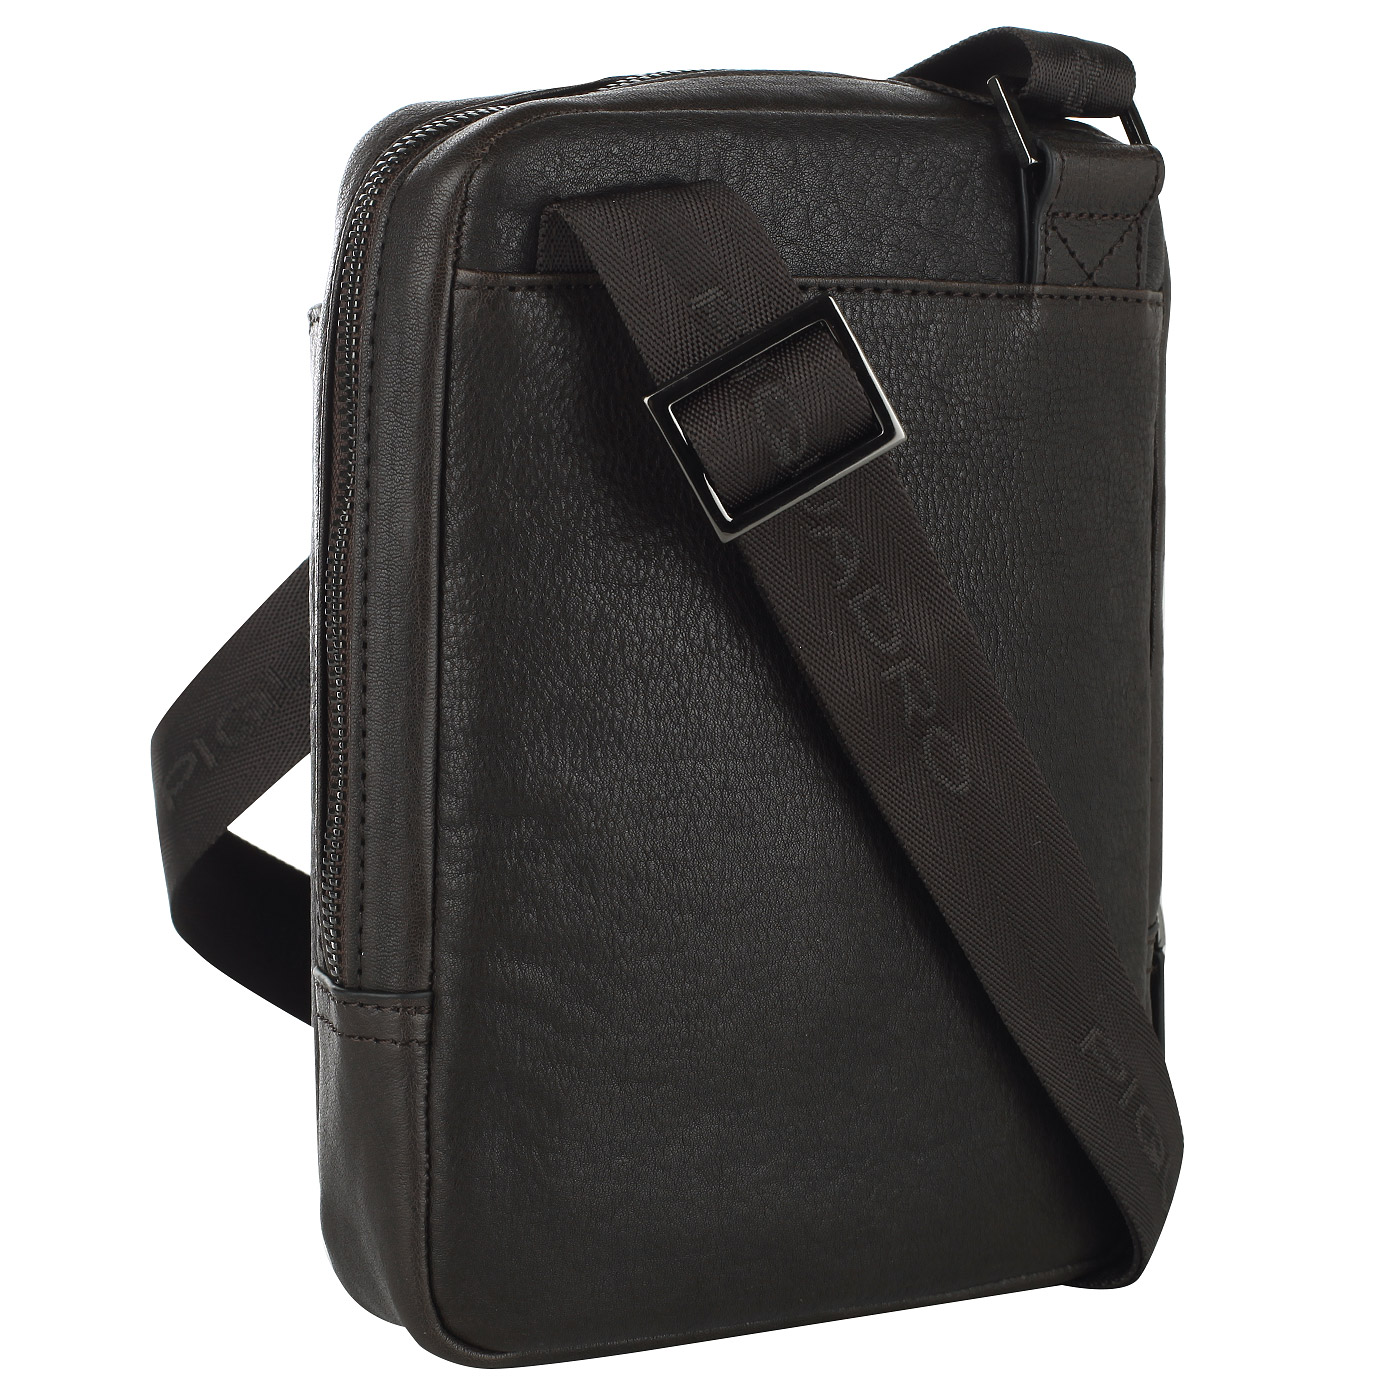 Мужская сумка-планшет с плечевым ремнем Piquadro Black square